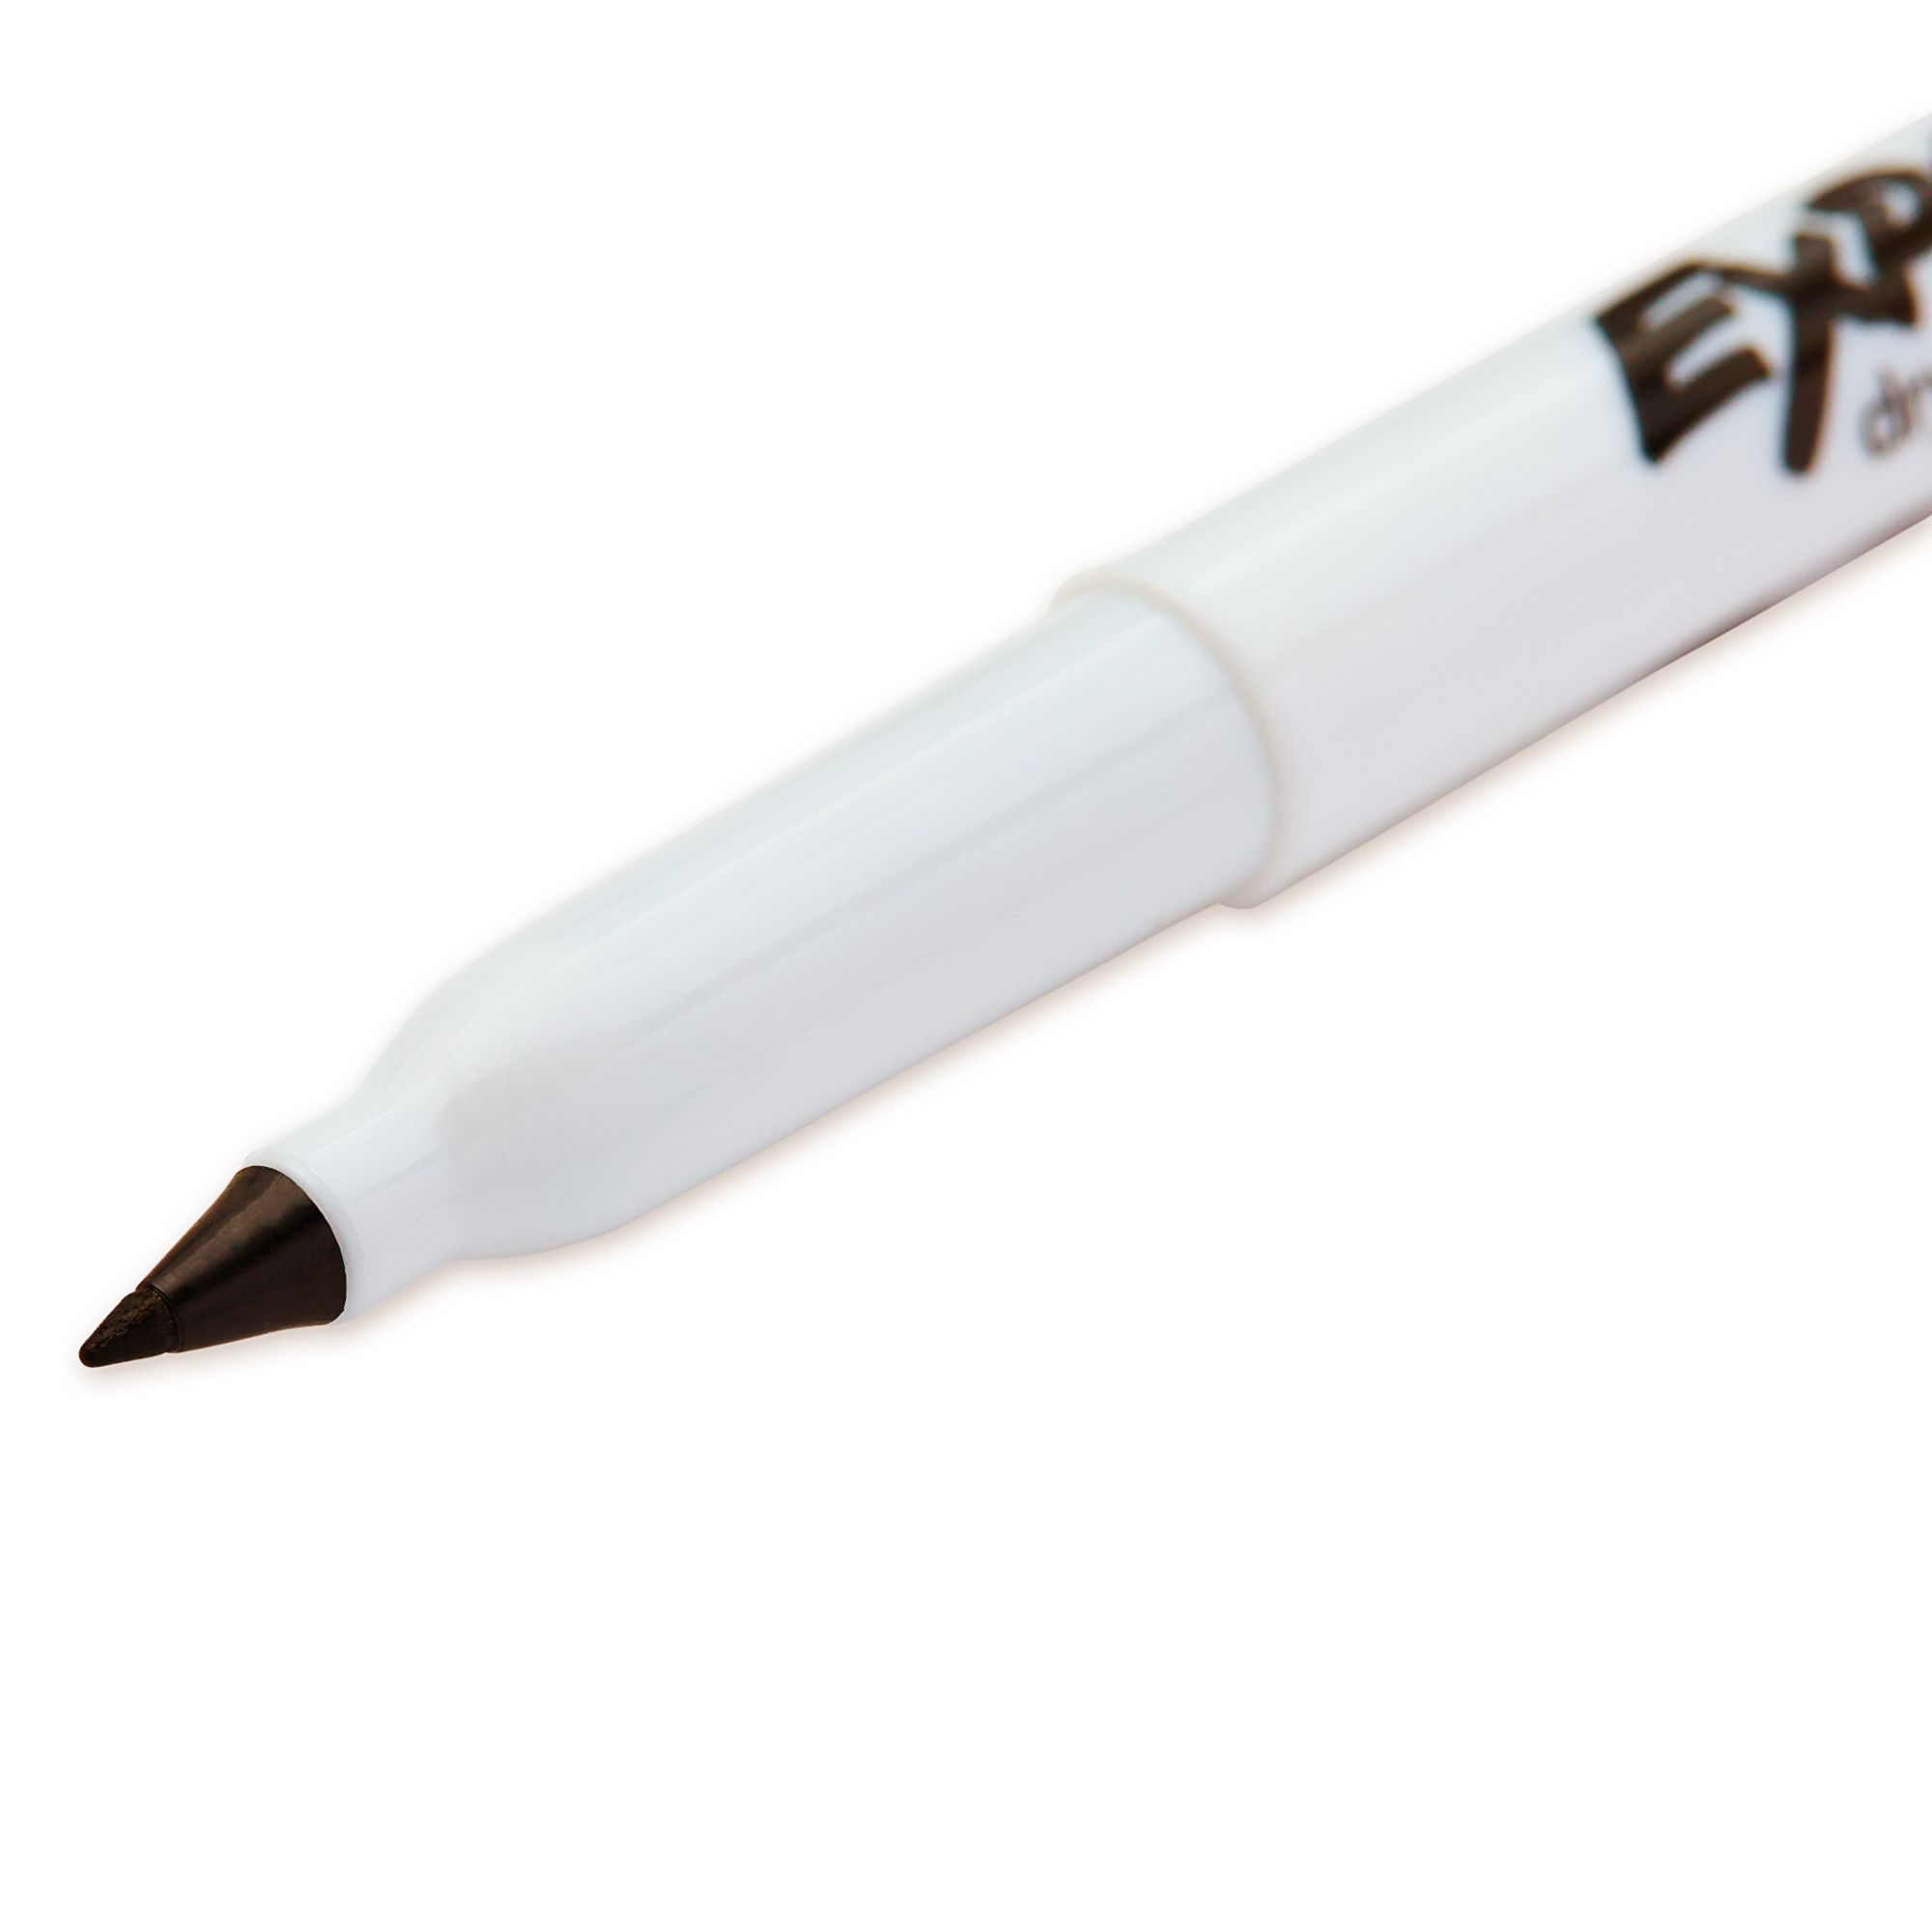 SAN83874 Expo Ultra Fine Tip Dry Erase Marker With Eraser - Fine